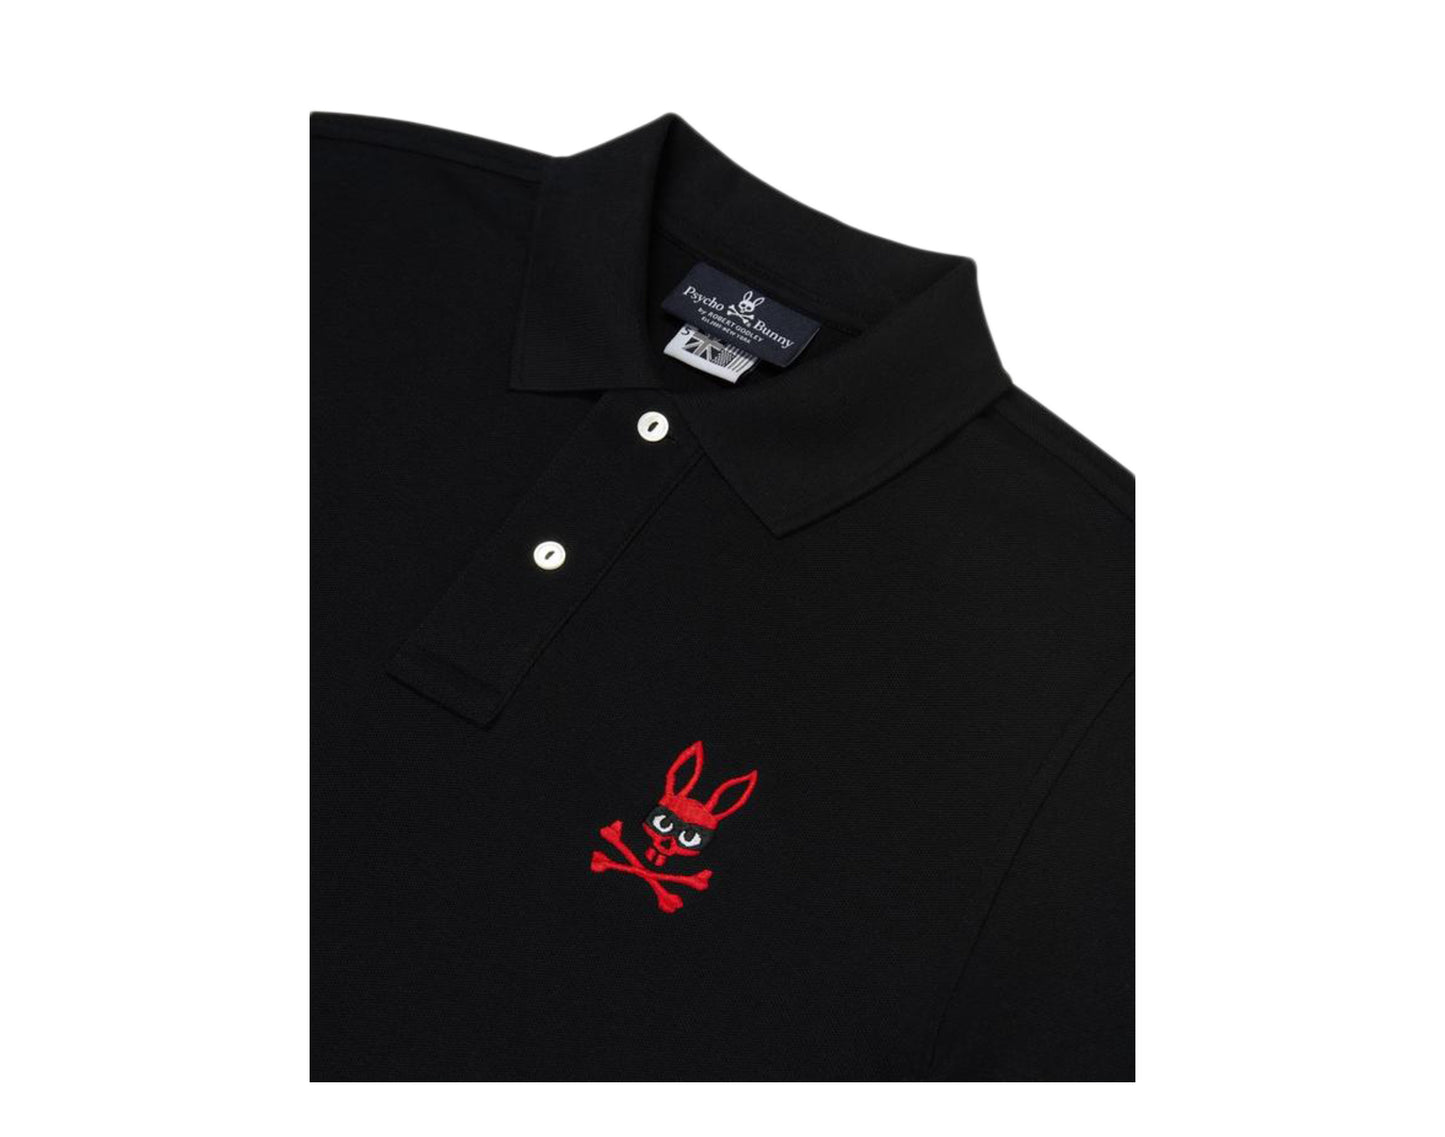 Psycho Bunny Mischief Zorro Bunny Polo Black Men's Shirt B6K446G1PC-BLK